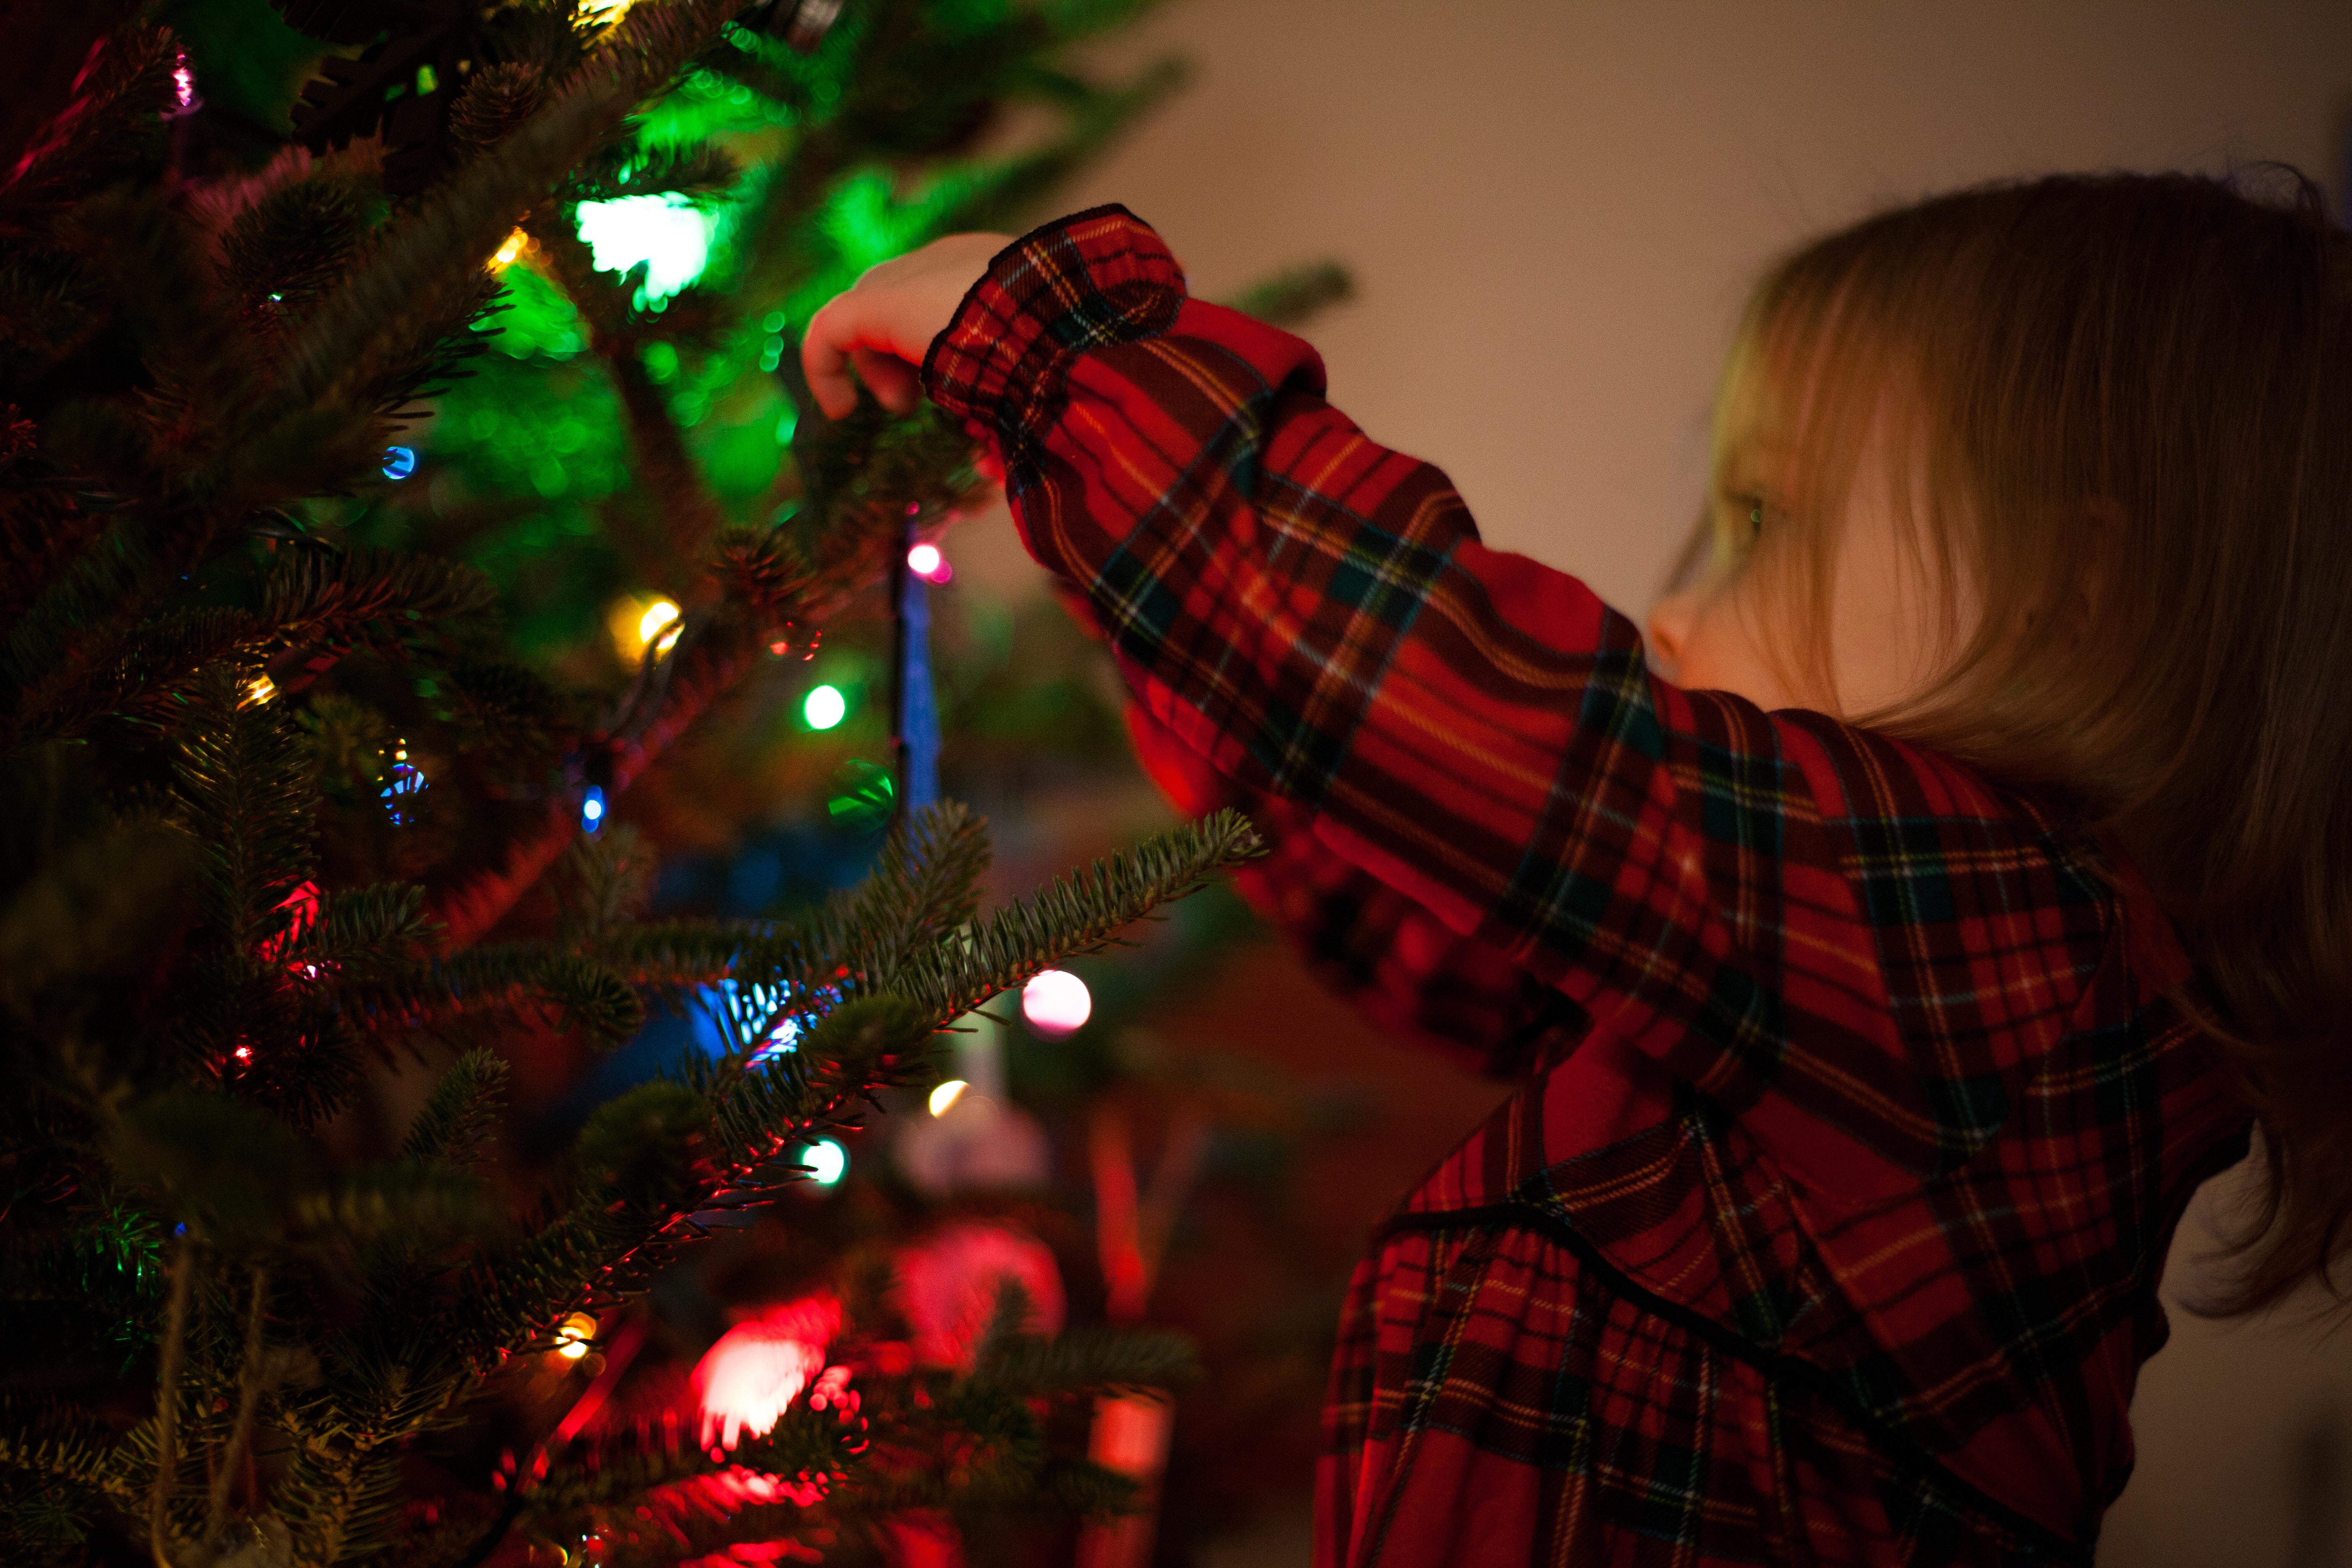 Crianças podem ajudar a montar a árvore de Natal (Foto: Josh Willink/Pexels)